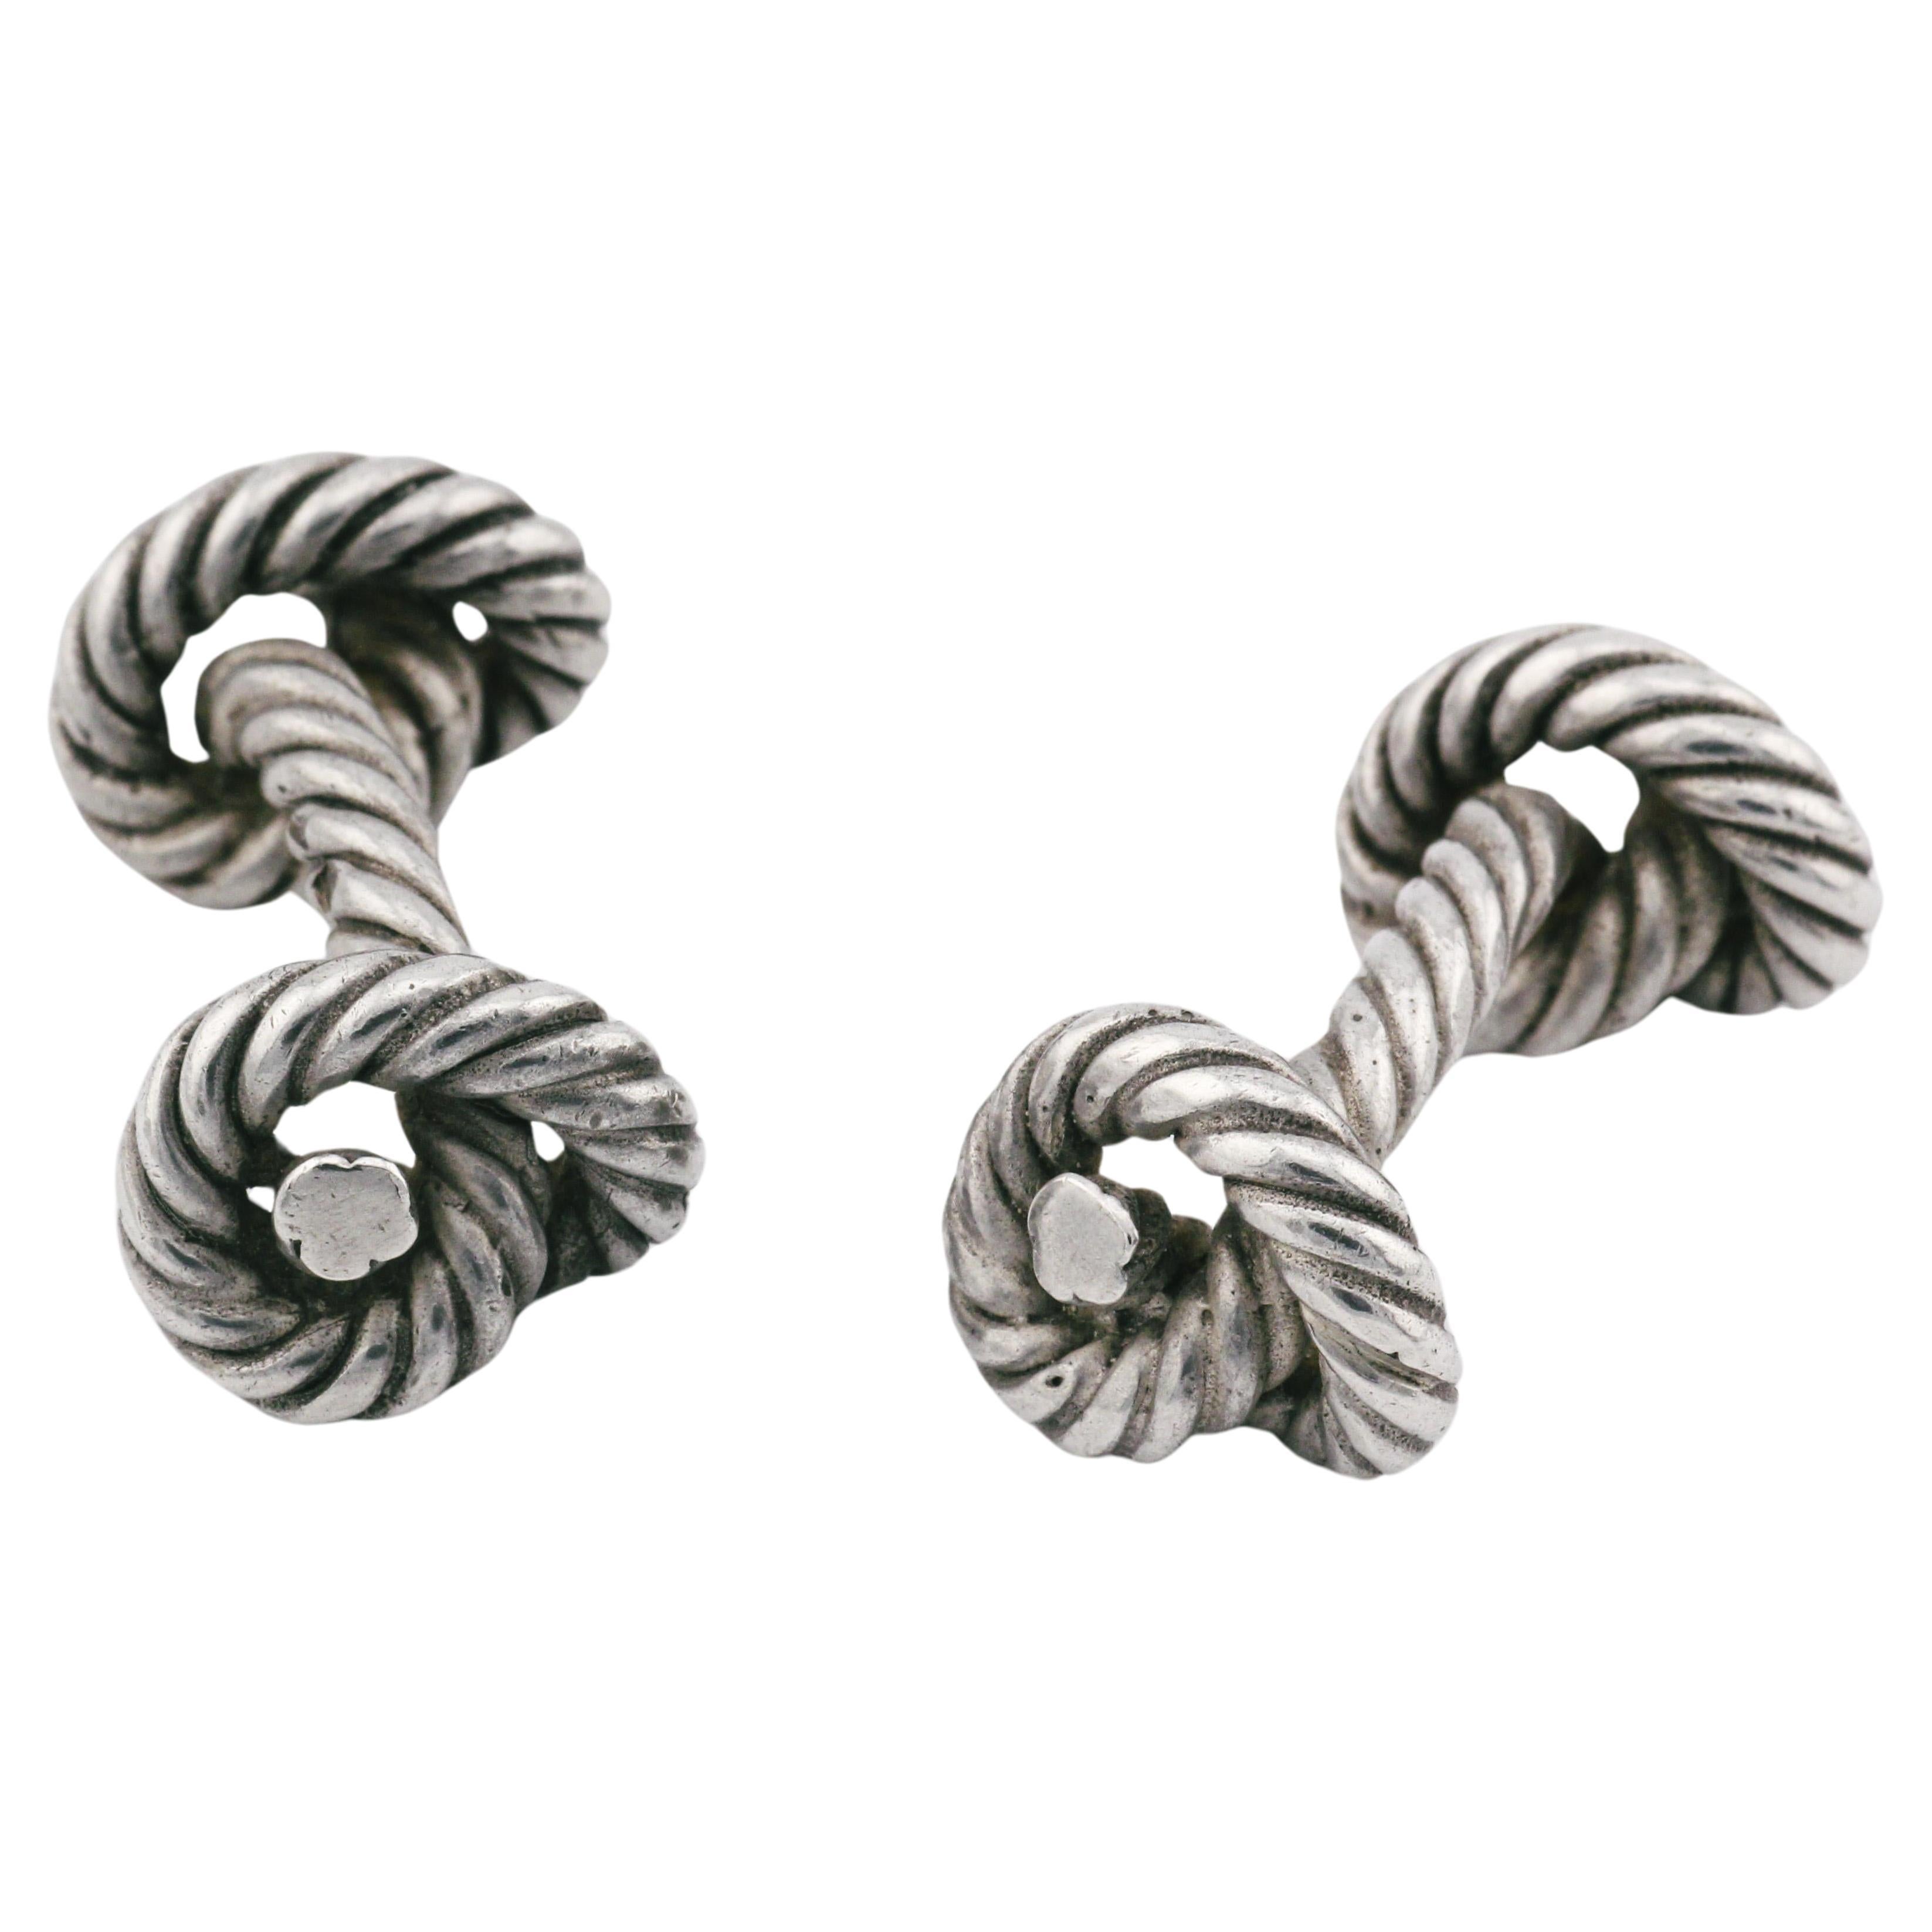 Hermes Vintage Sterling Silver Knot Cufflinks